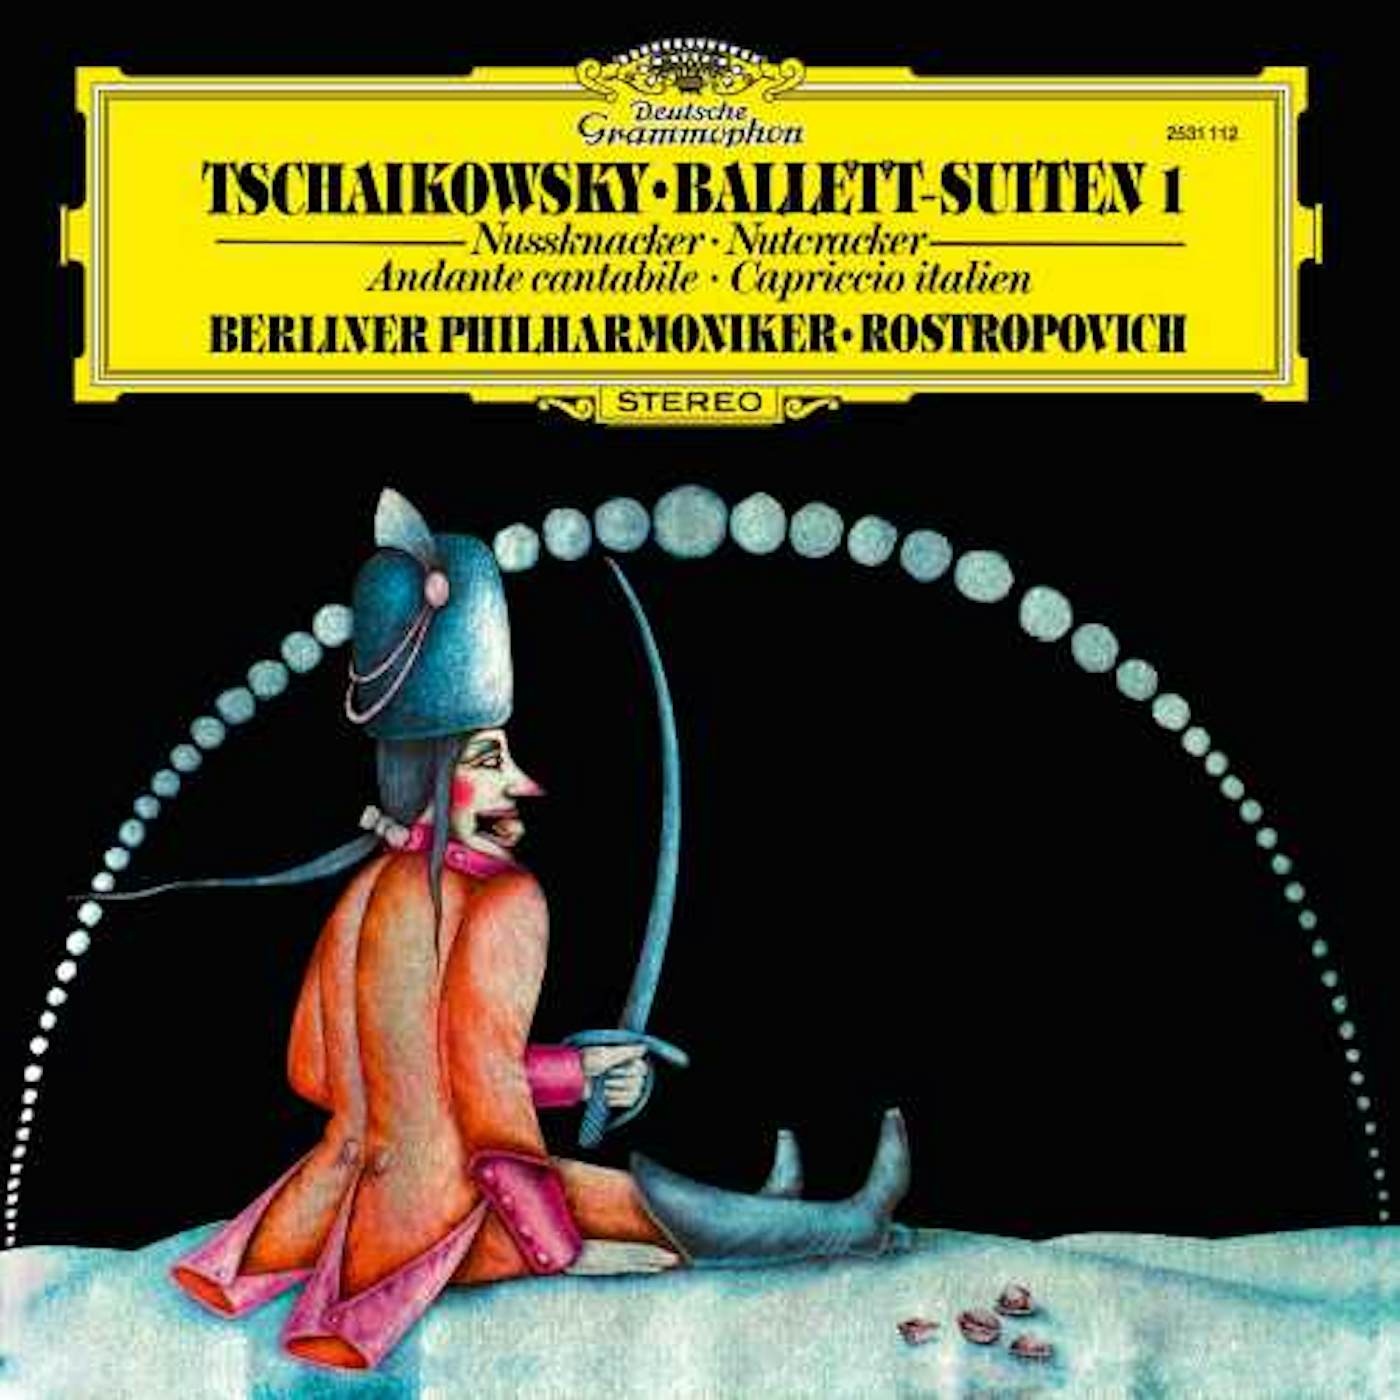 Mstislav Rostropovich TCHAIKOVSKY: BALLET-SUITEN 1-THE NUTCRACKER Vinyl Record - UK Release